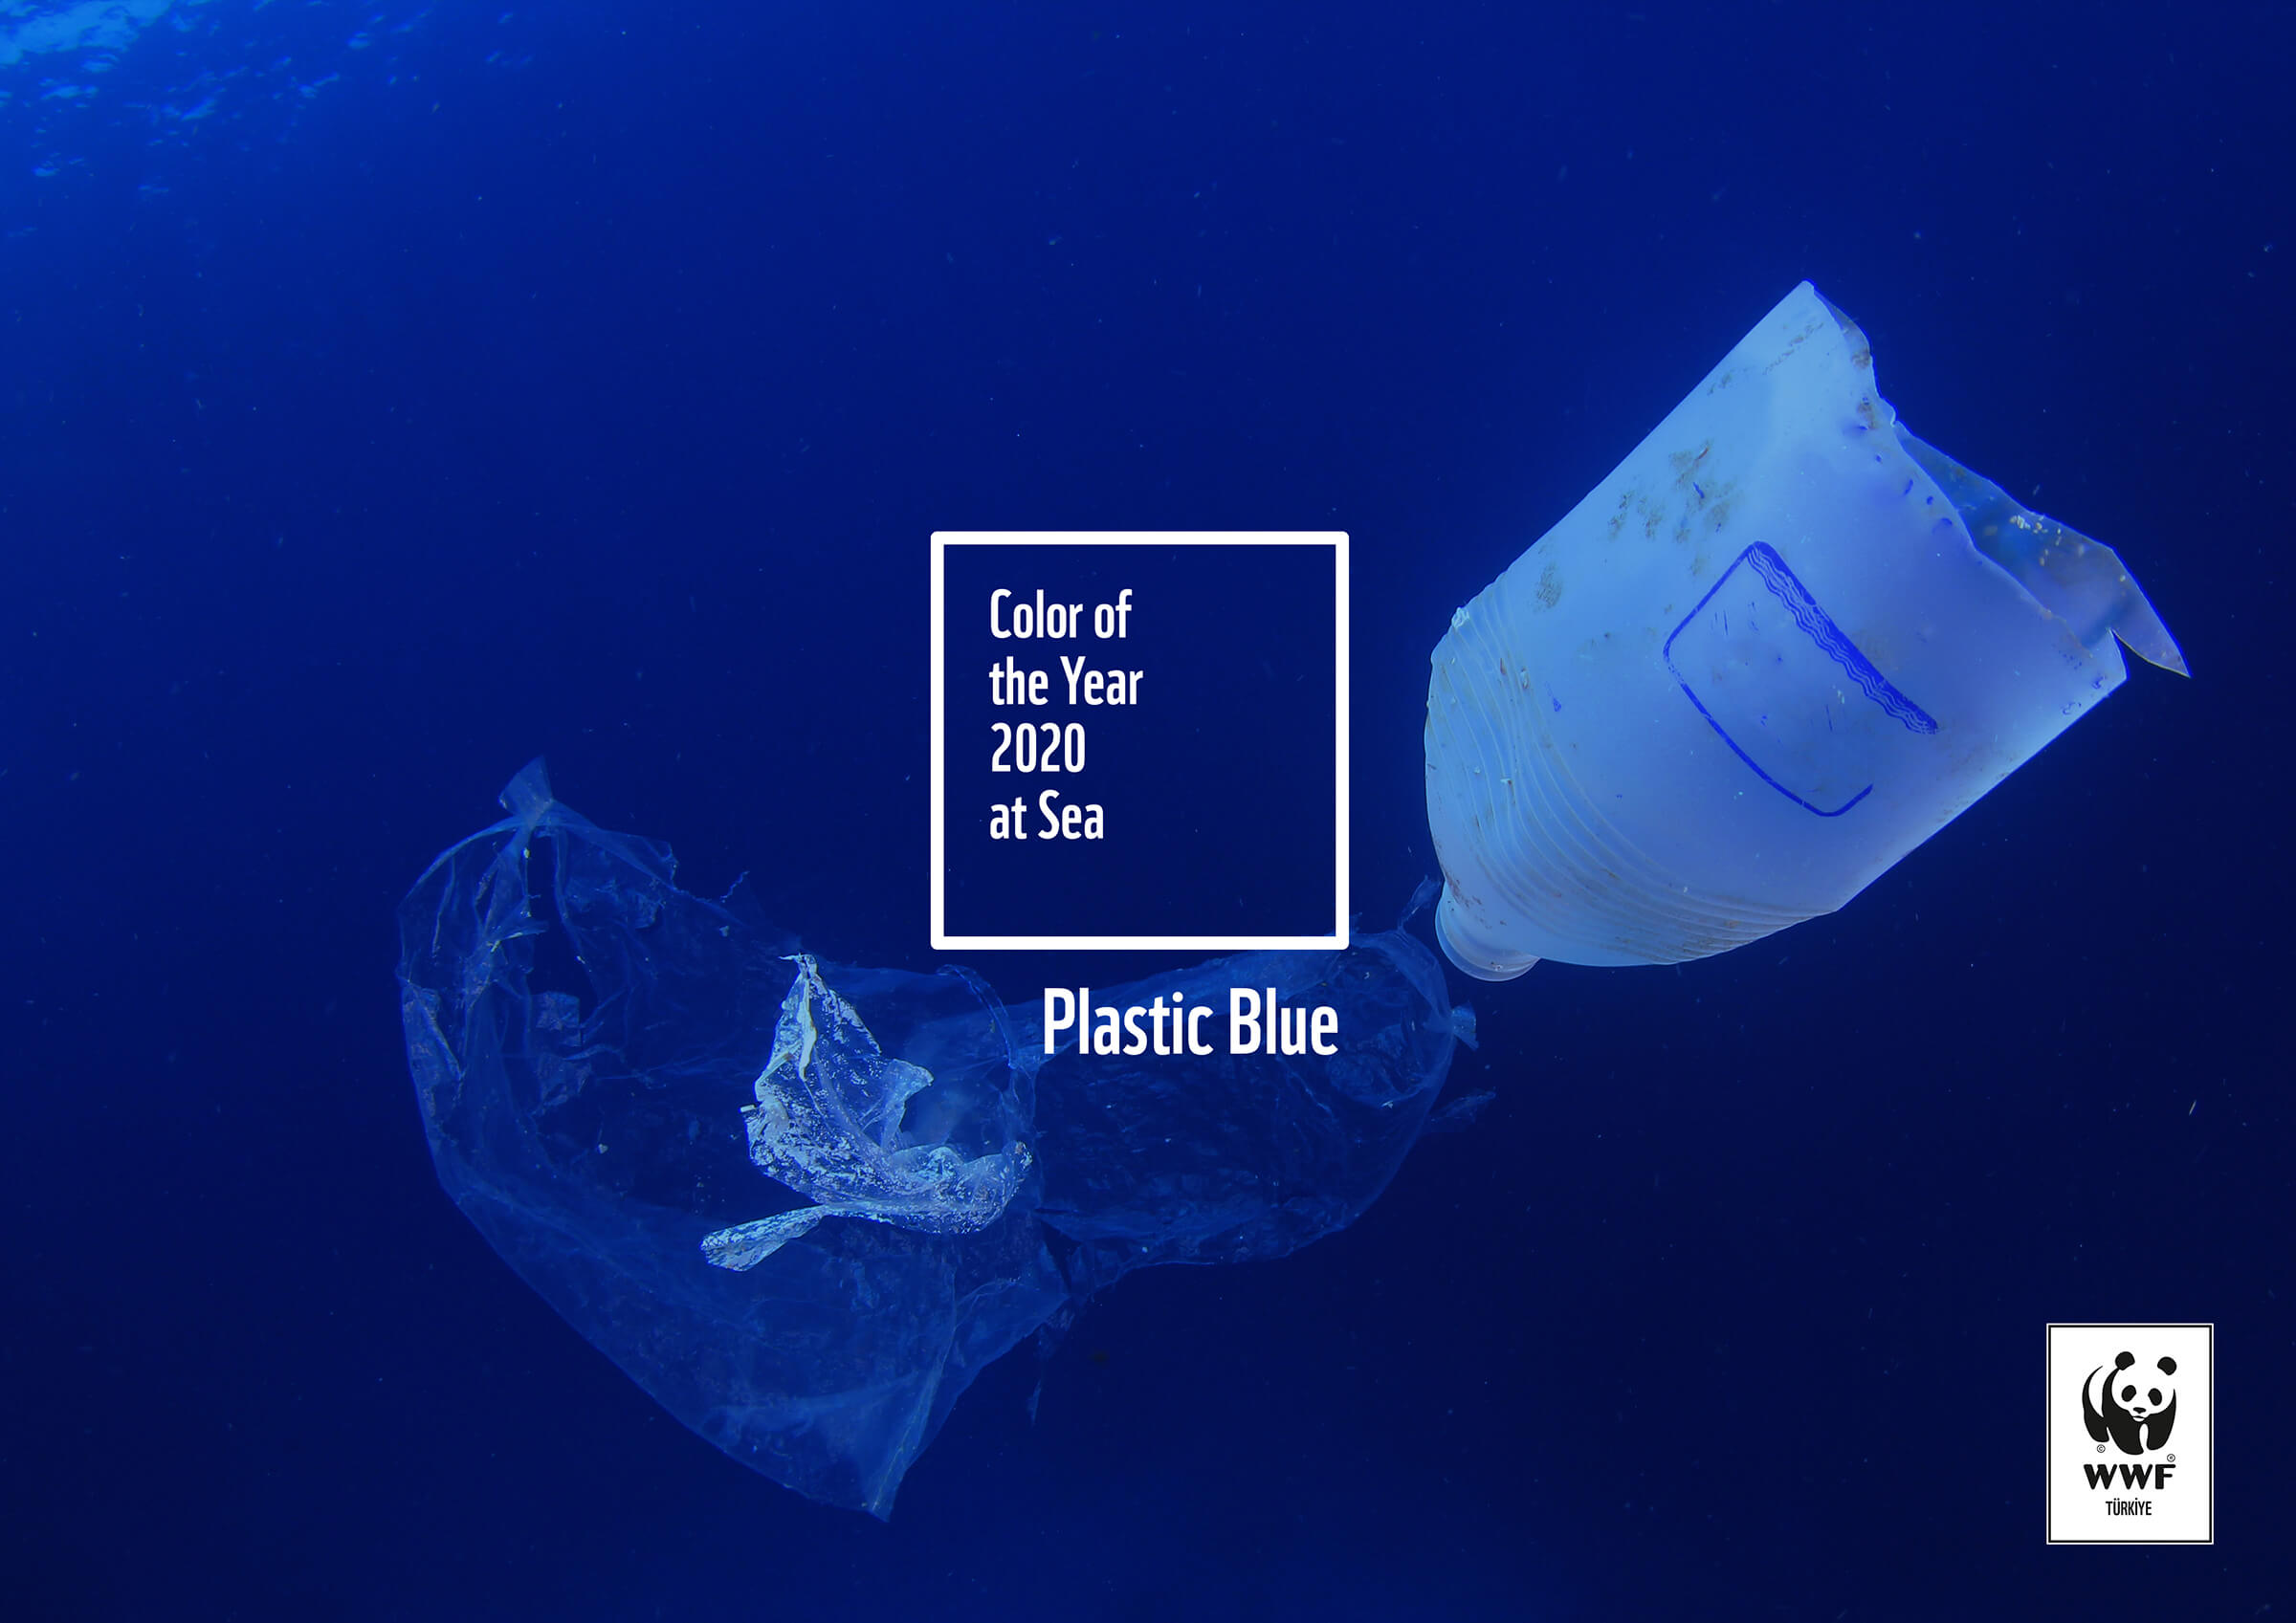 Plastic Blue by WWF